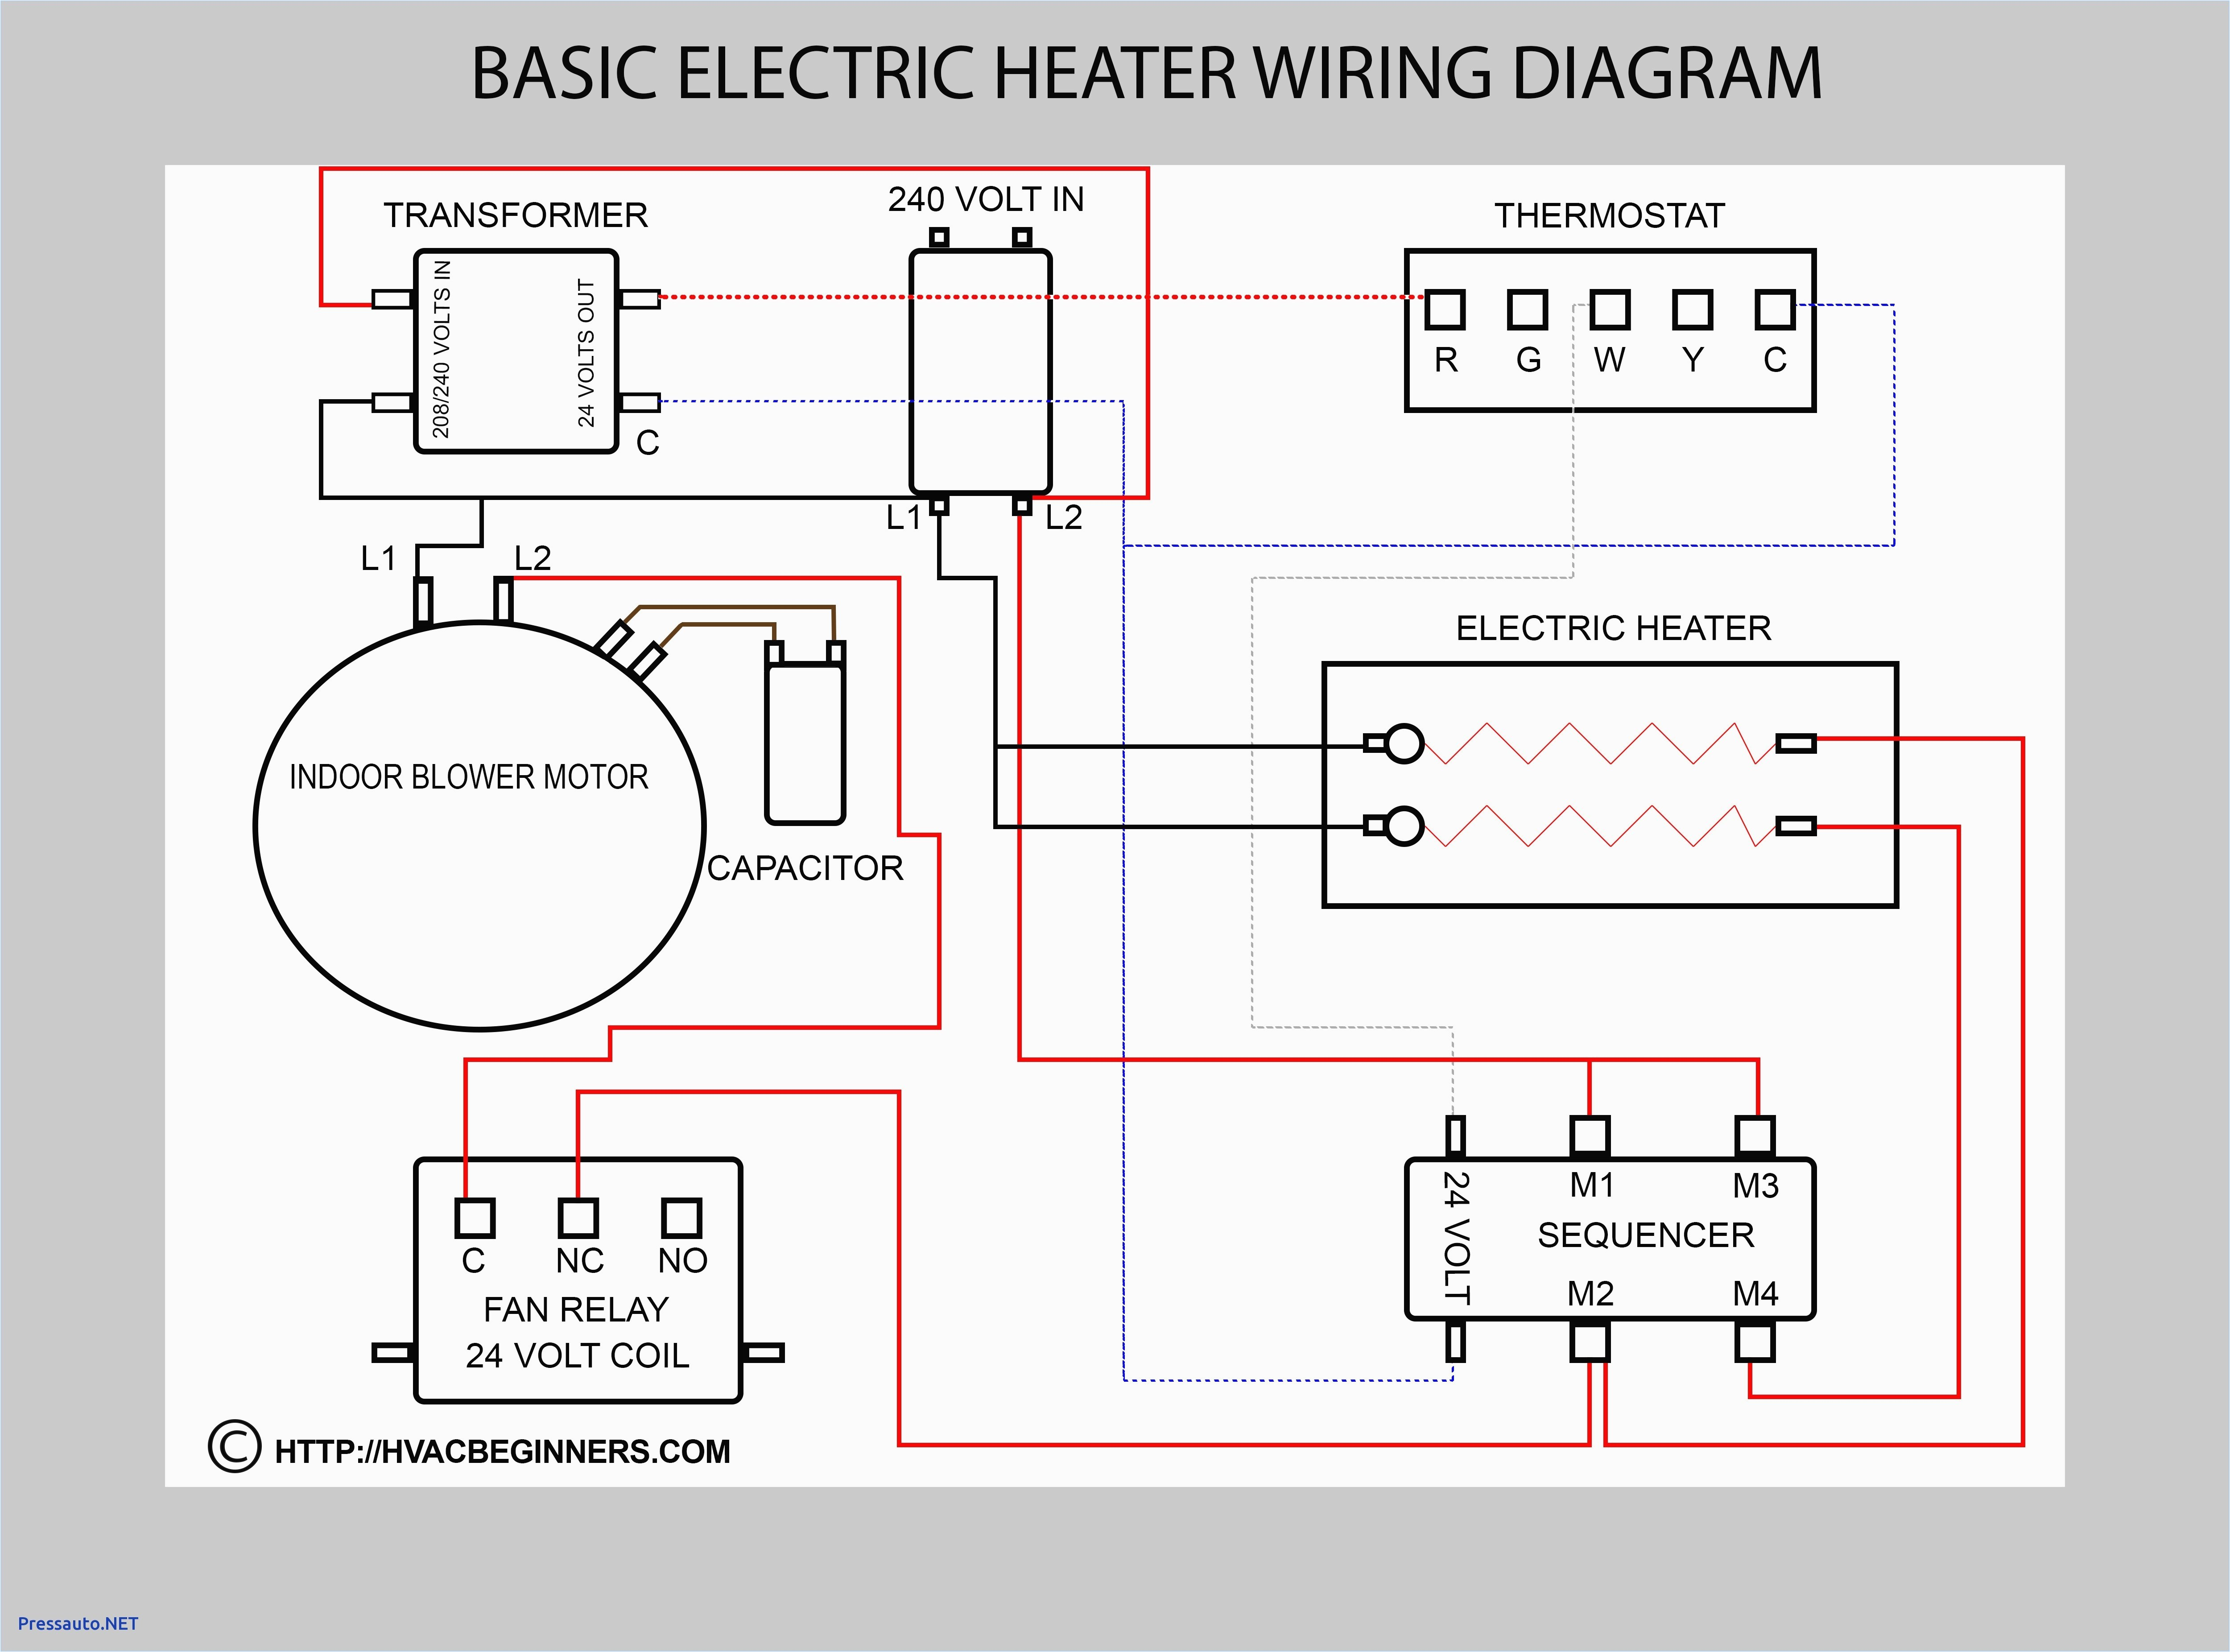 tr200 wiring diagram wiring diagrams for tr200 wiring diagram